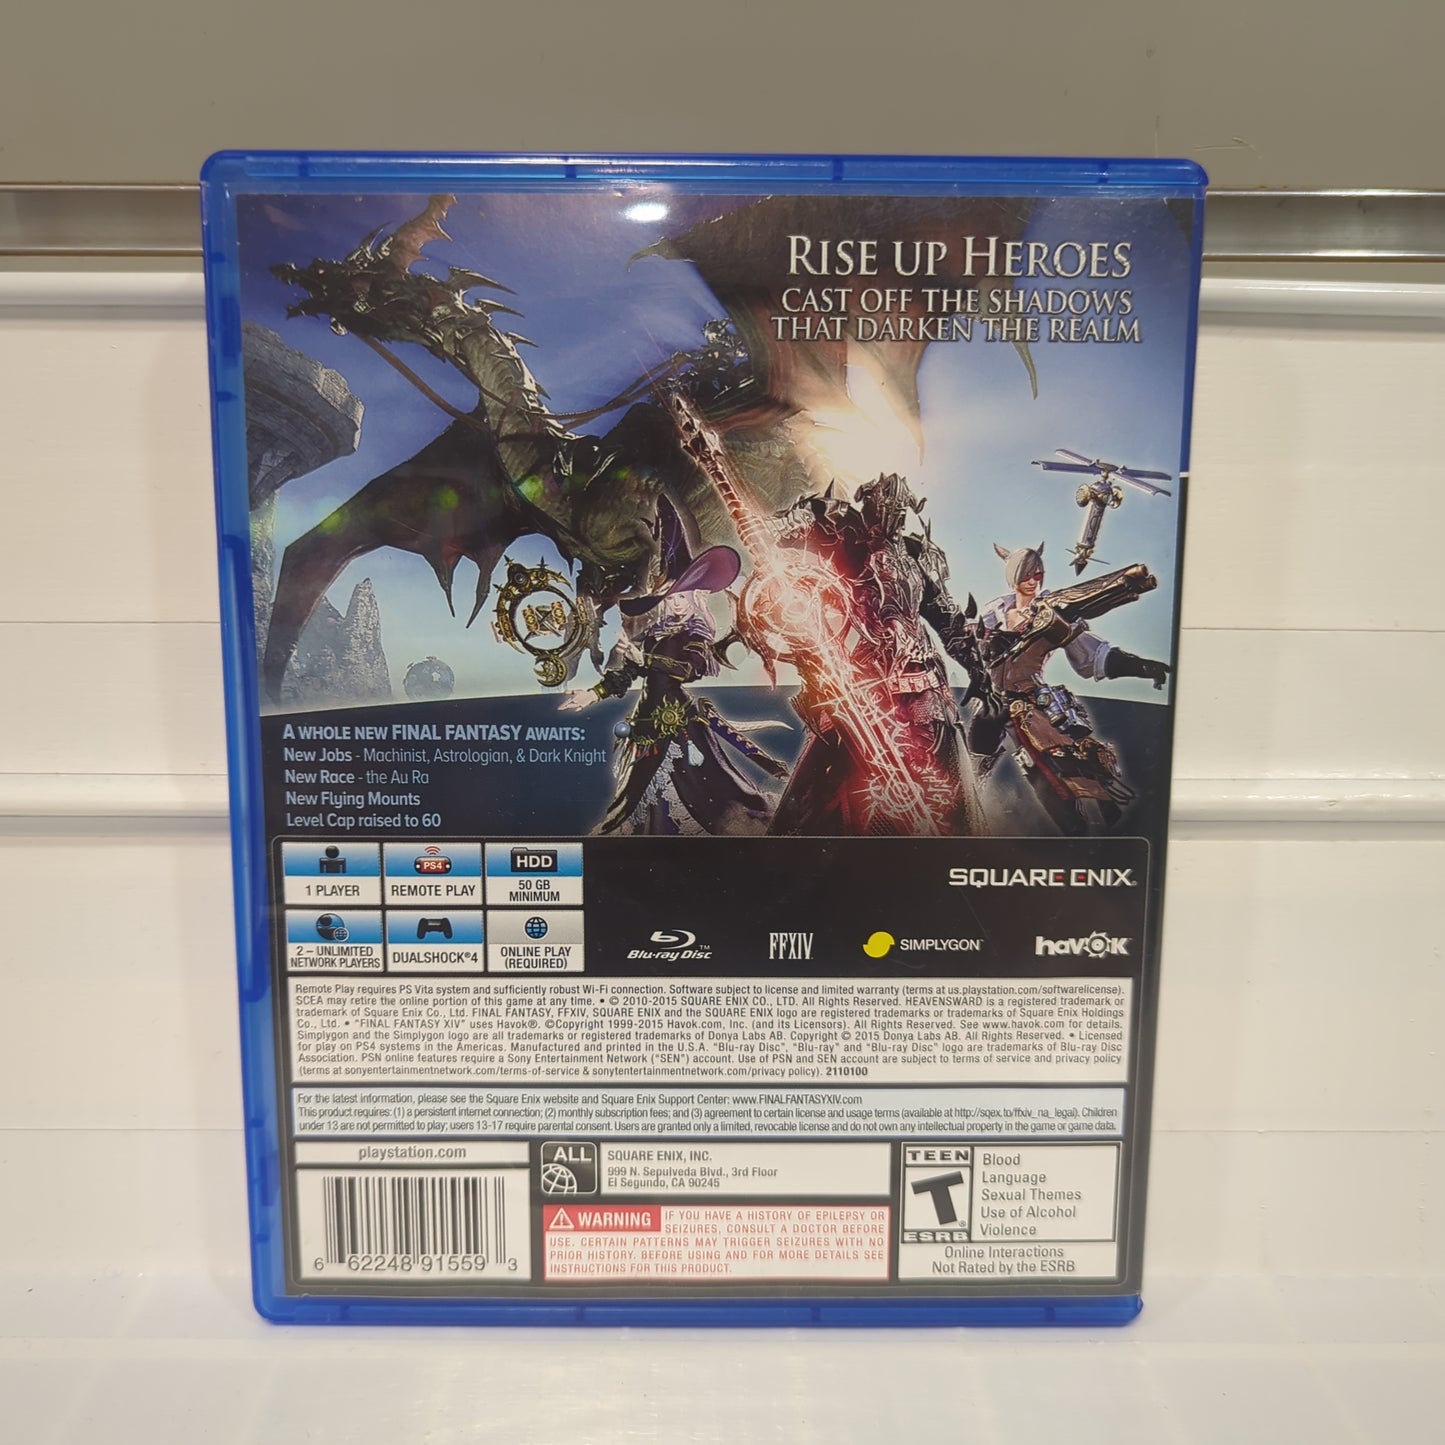 Final Fantasy XIV Online: Heavensward - Playstation 4